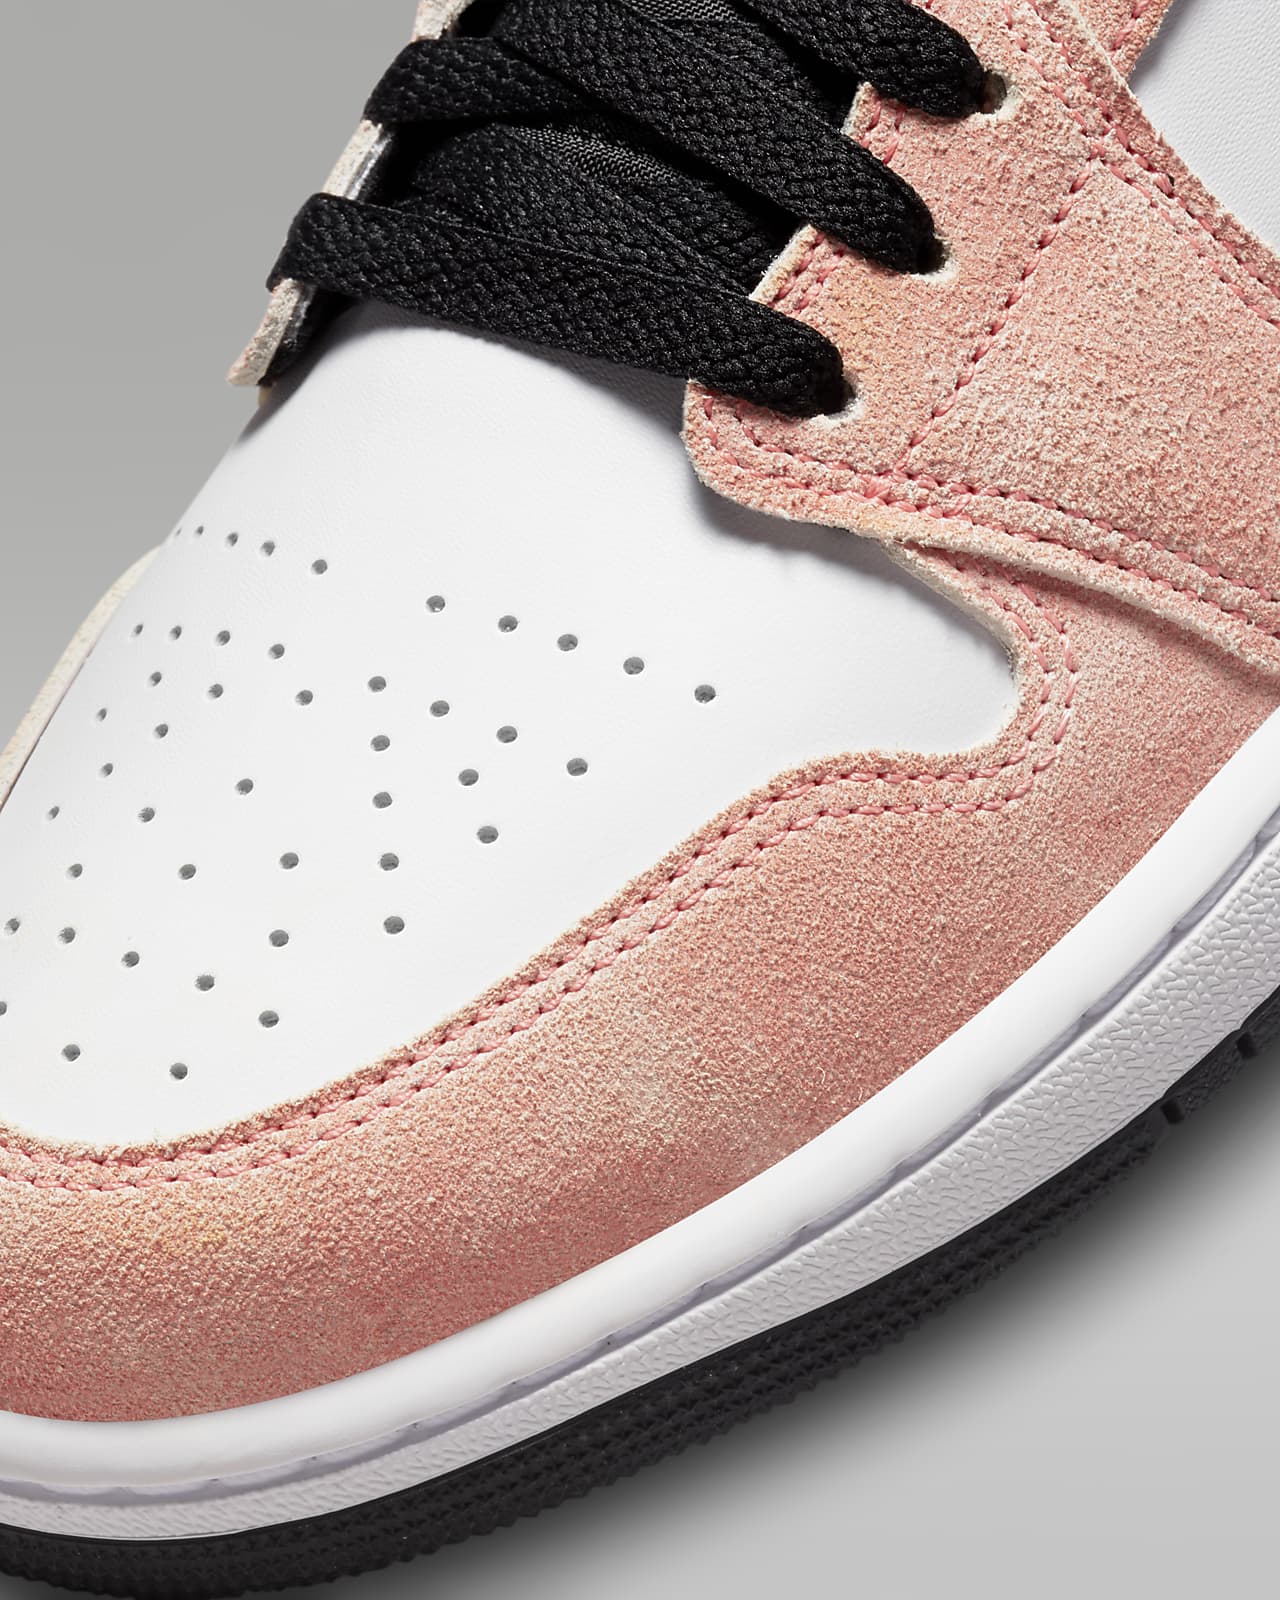 Air Jordan 1 Mid SE Men's Shoes, by Nike Size 8 (Brown)